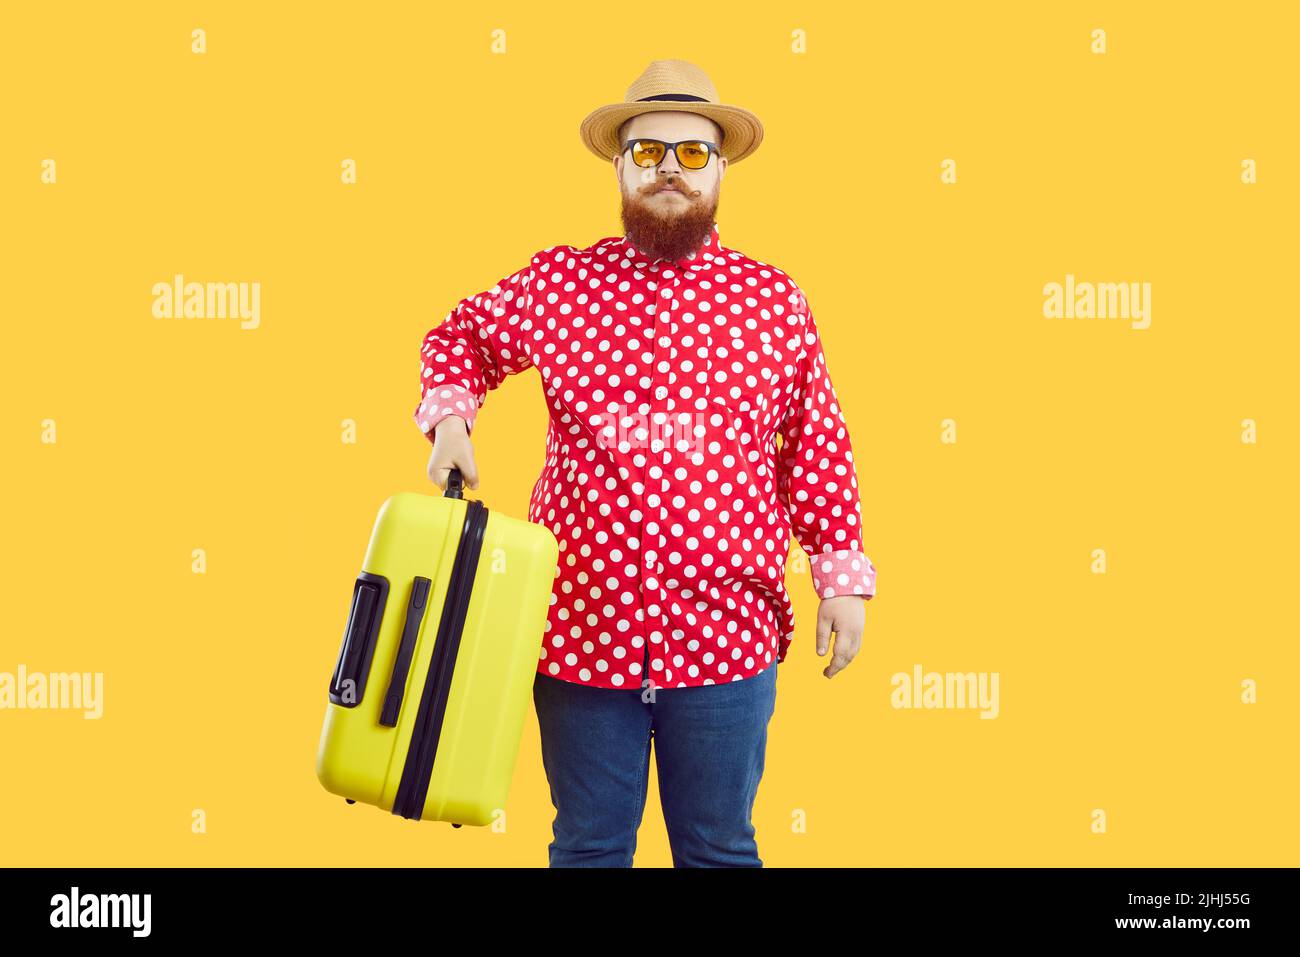 Stylish chubby man with serious expression holding heavy suitcase on orange background. Stock Photo